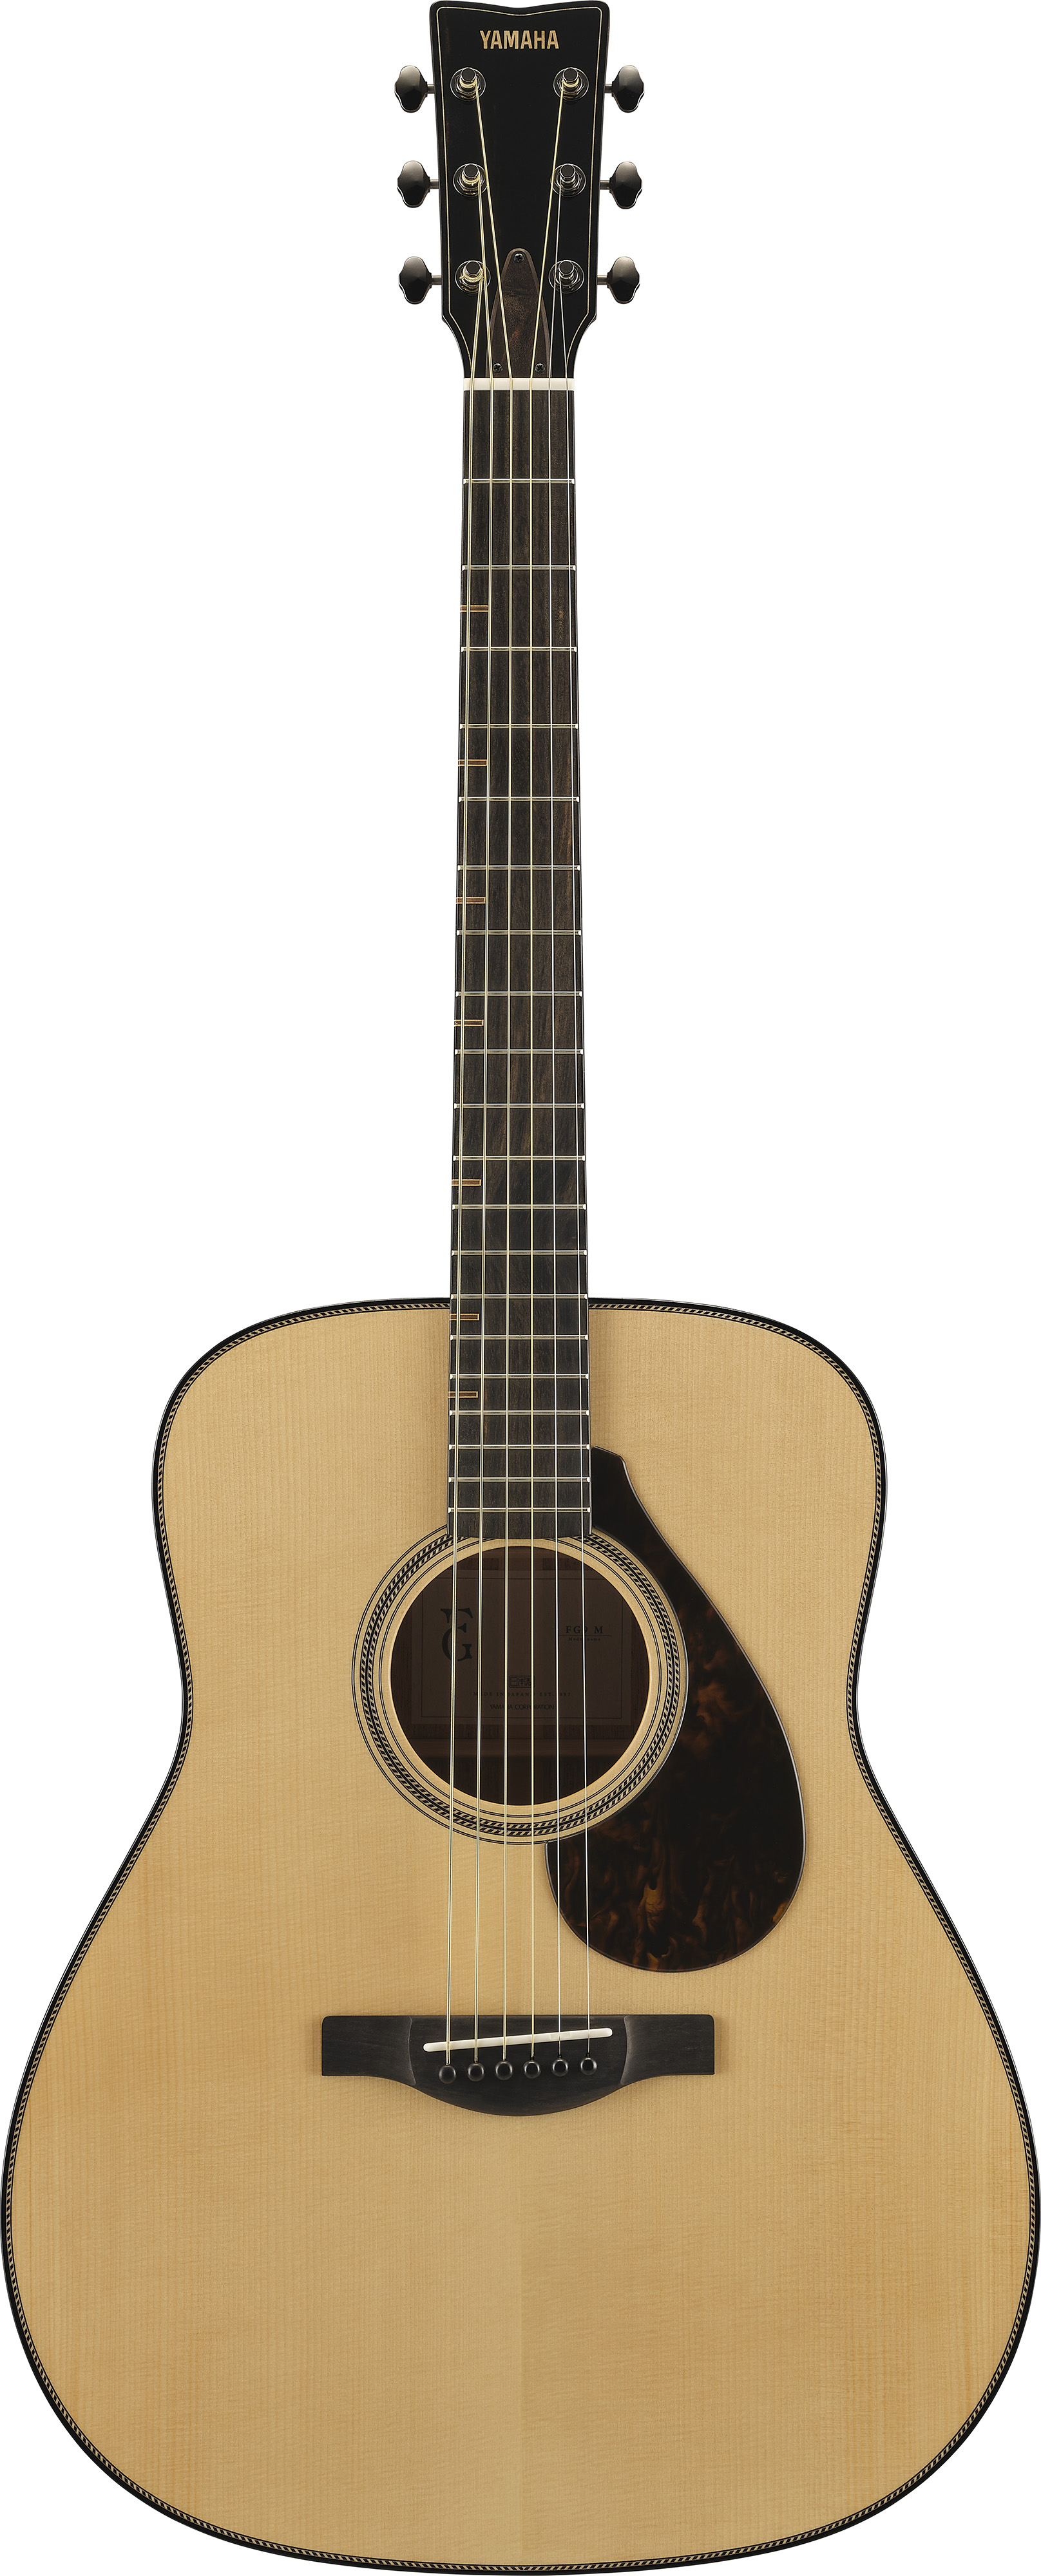 Yamaha FG 9M Western Guitar (Natural)